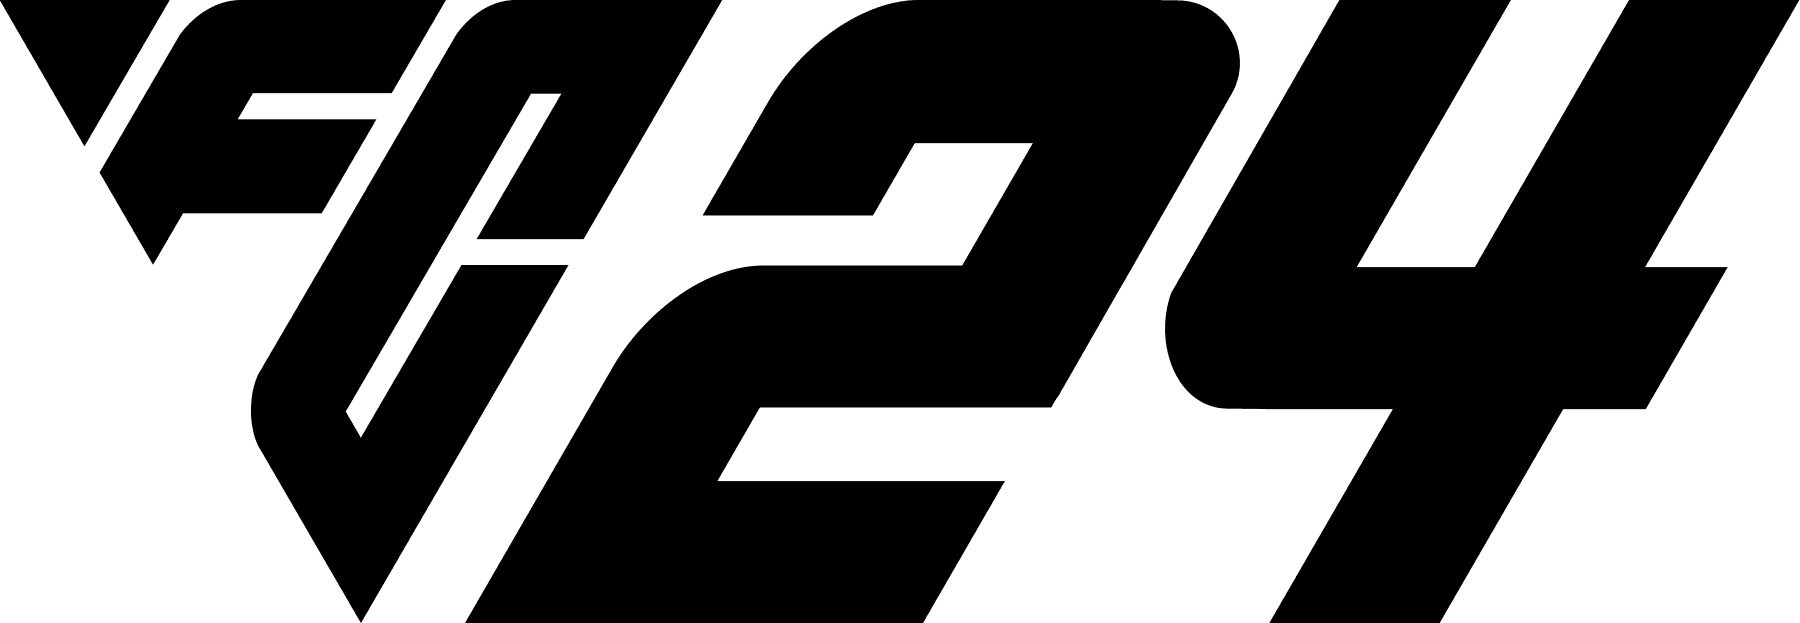 File:EA Sports FC 24 logo.svg - Wikipedia